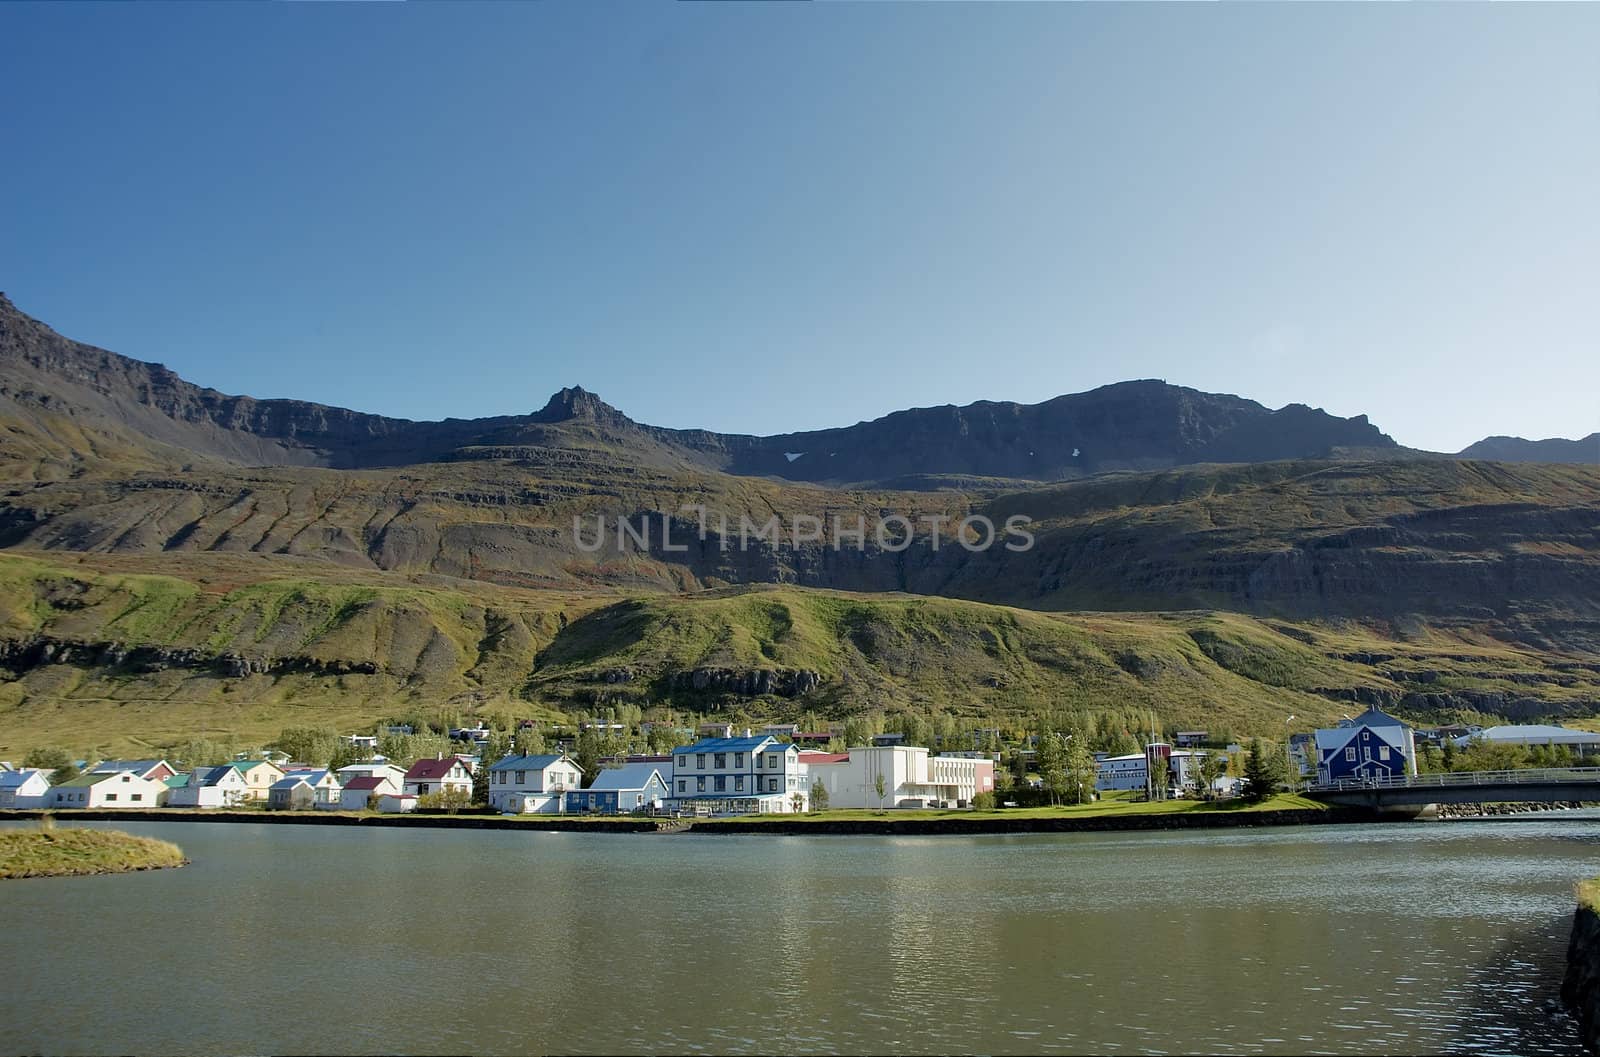 Housesat fjord's waterfront by t3mujin